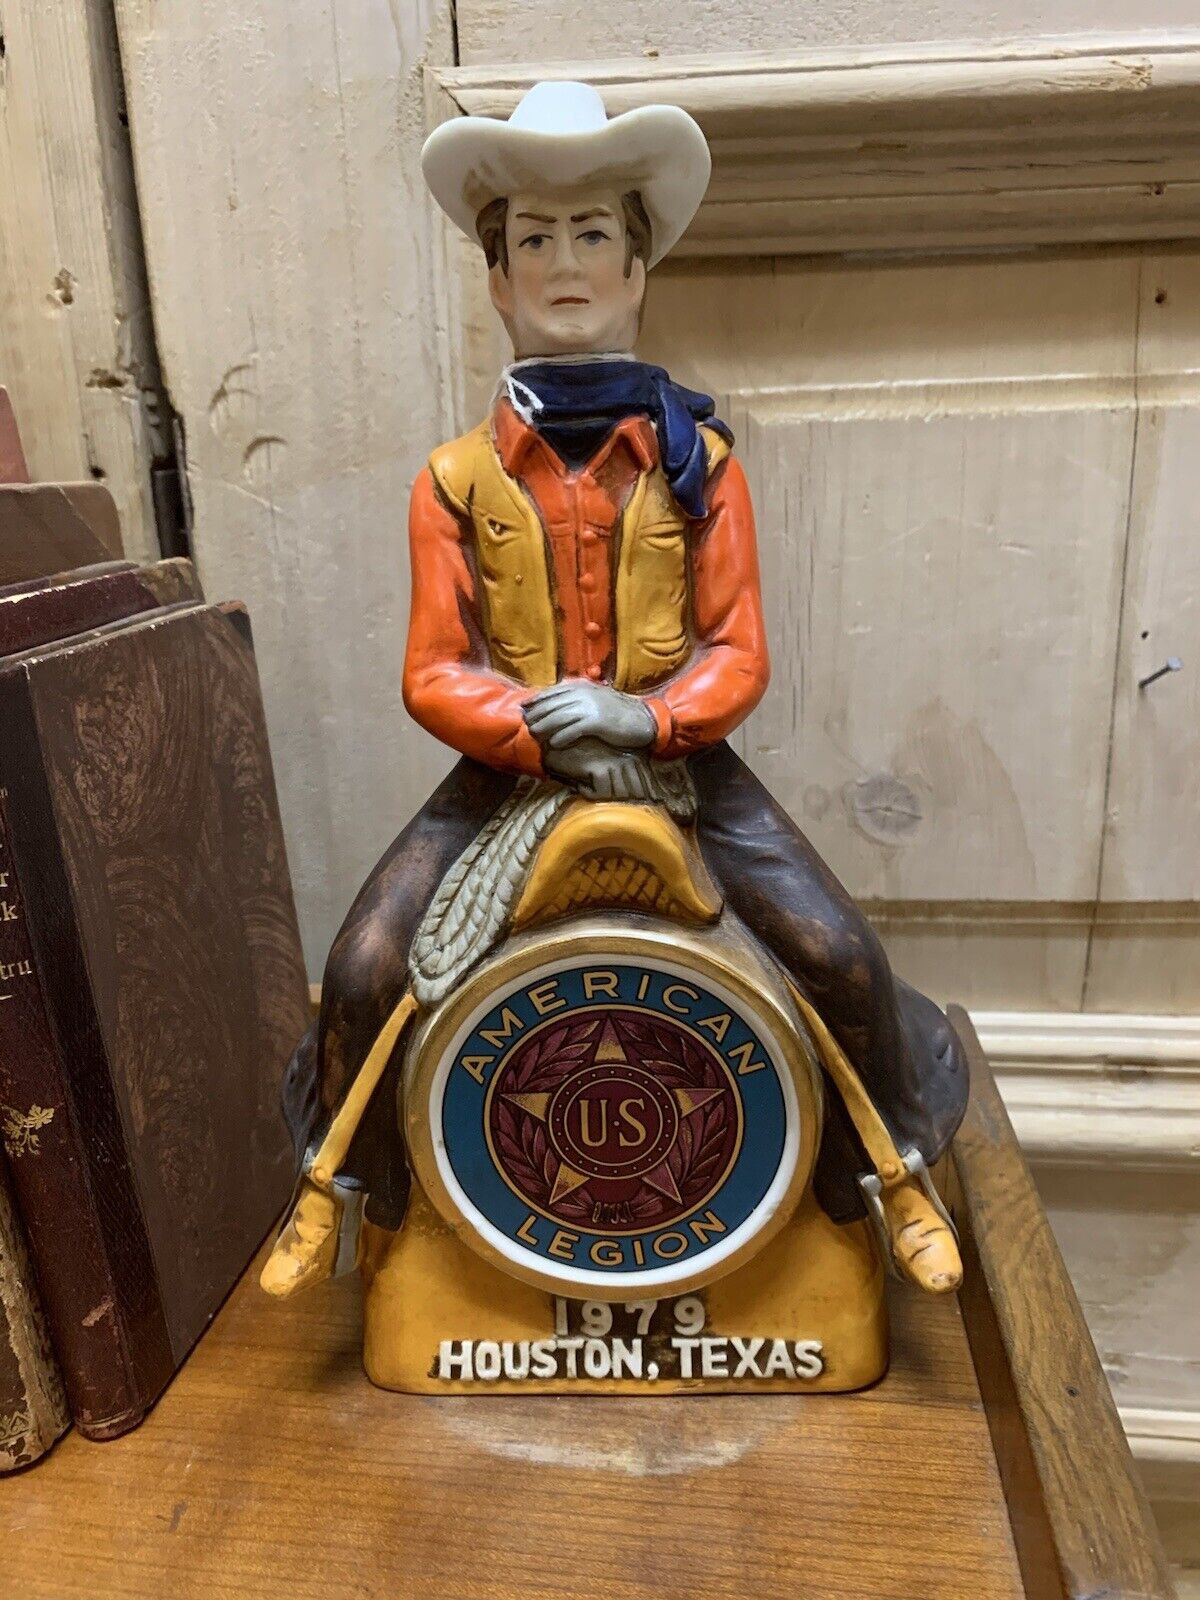 1979 Houston Texas American Legion Cowboy Rodeo Liquor Decanter Whiskey